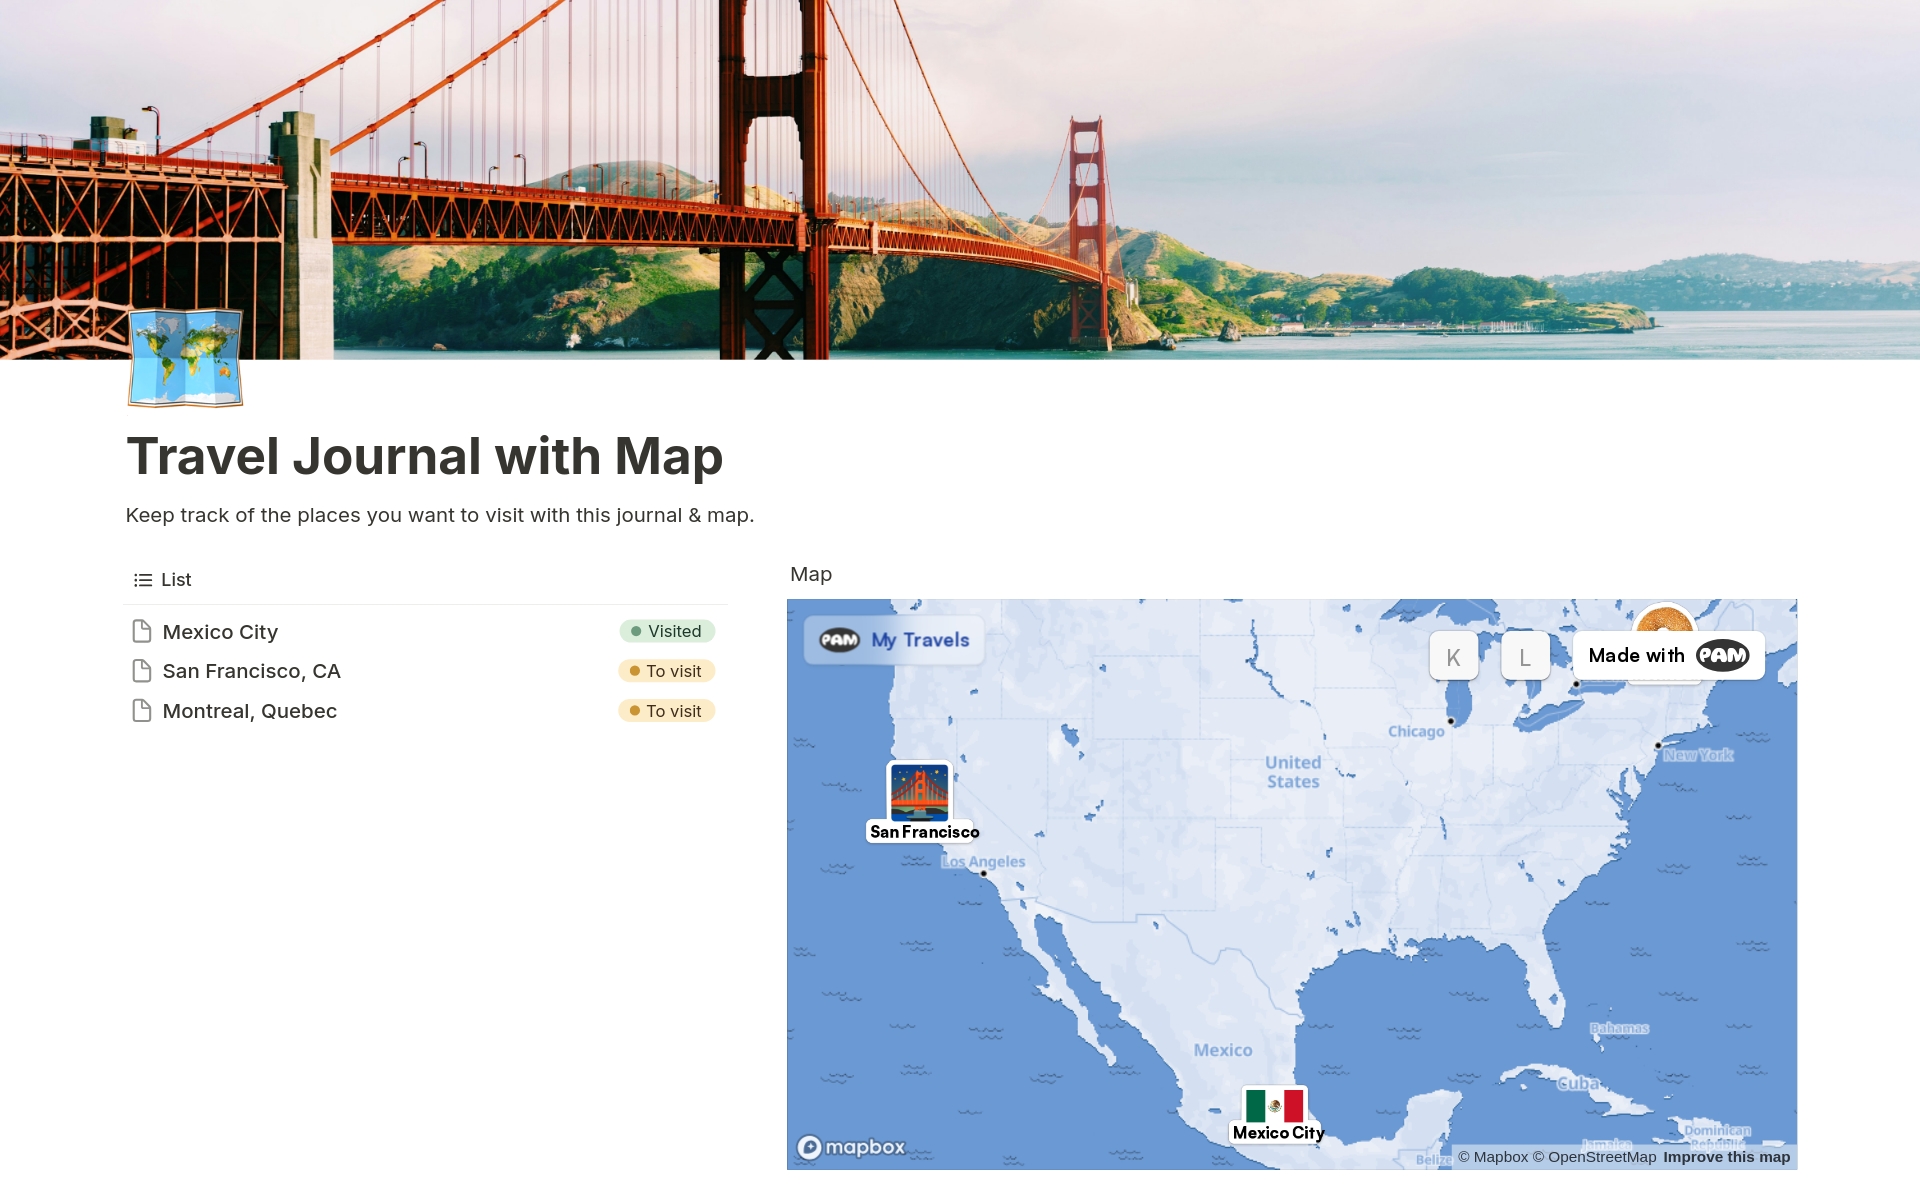 Travel Journal with Mapのテンプレートのプレビュー